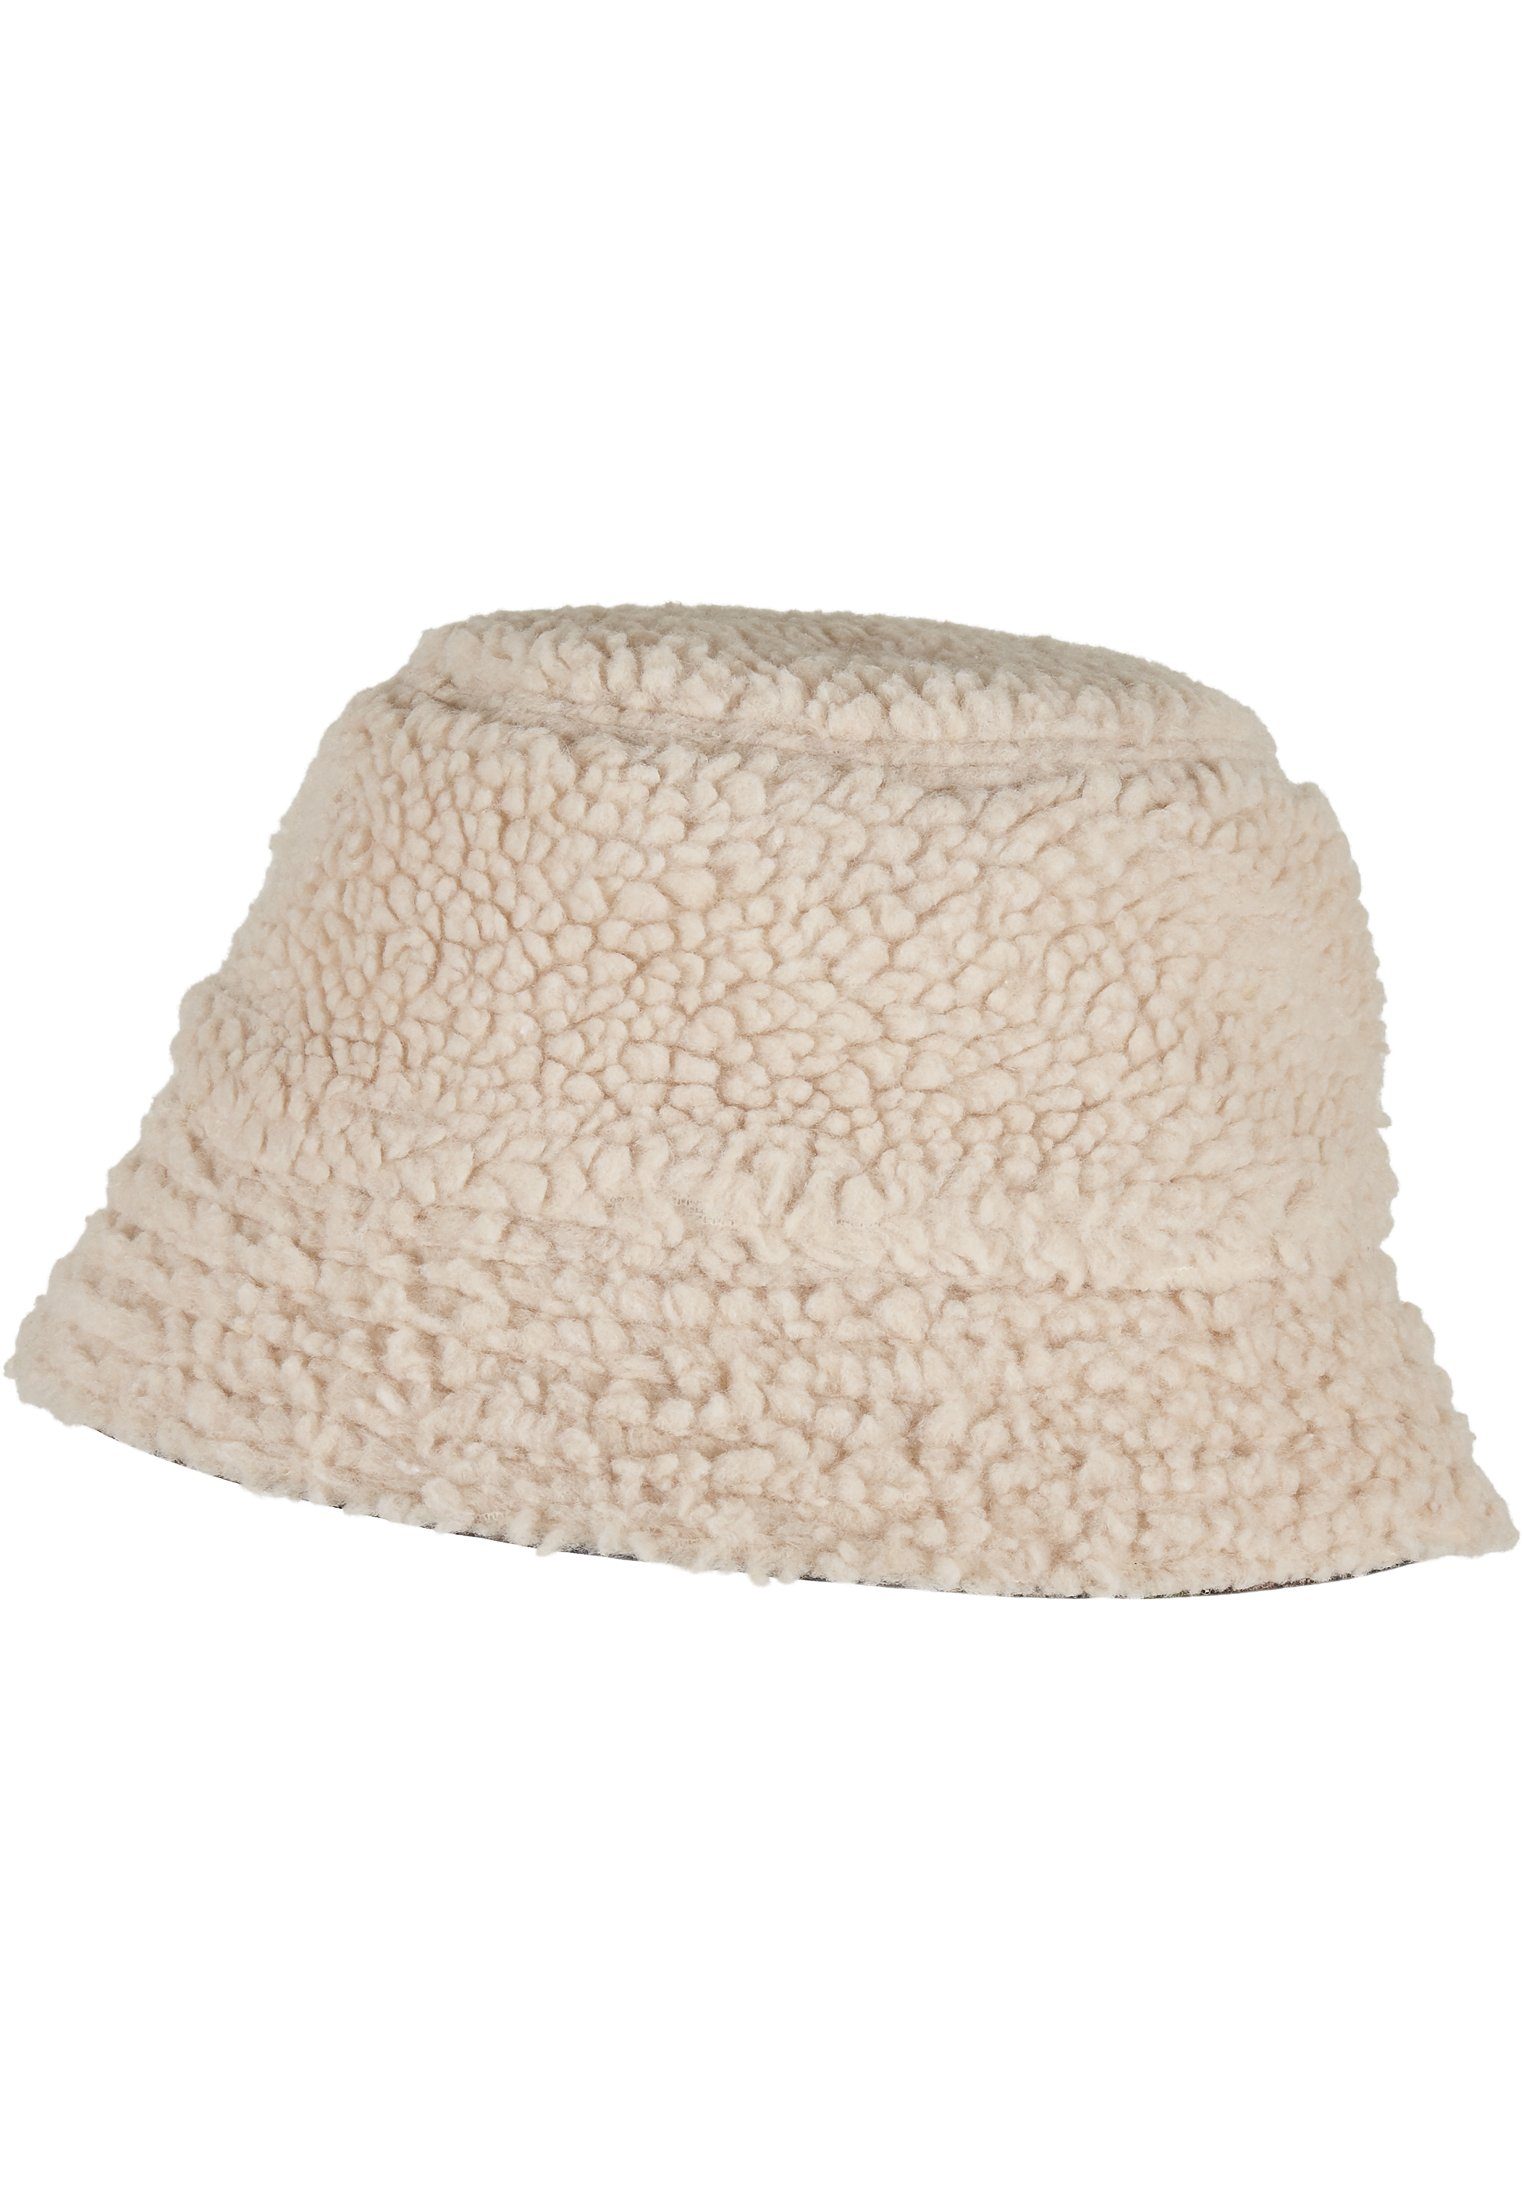 Flexfit Flex Cap Bucket Hat Real Tree Camo Reversible Hat Bucket Sherpa